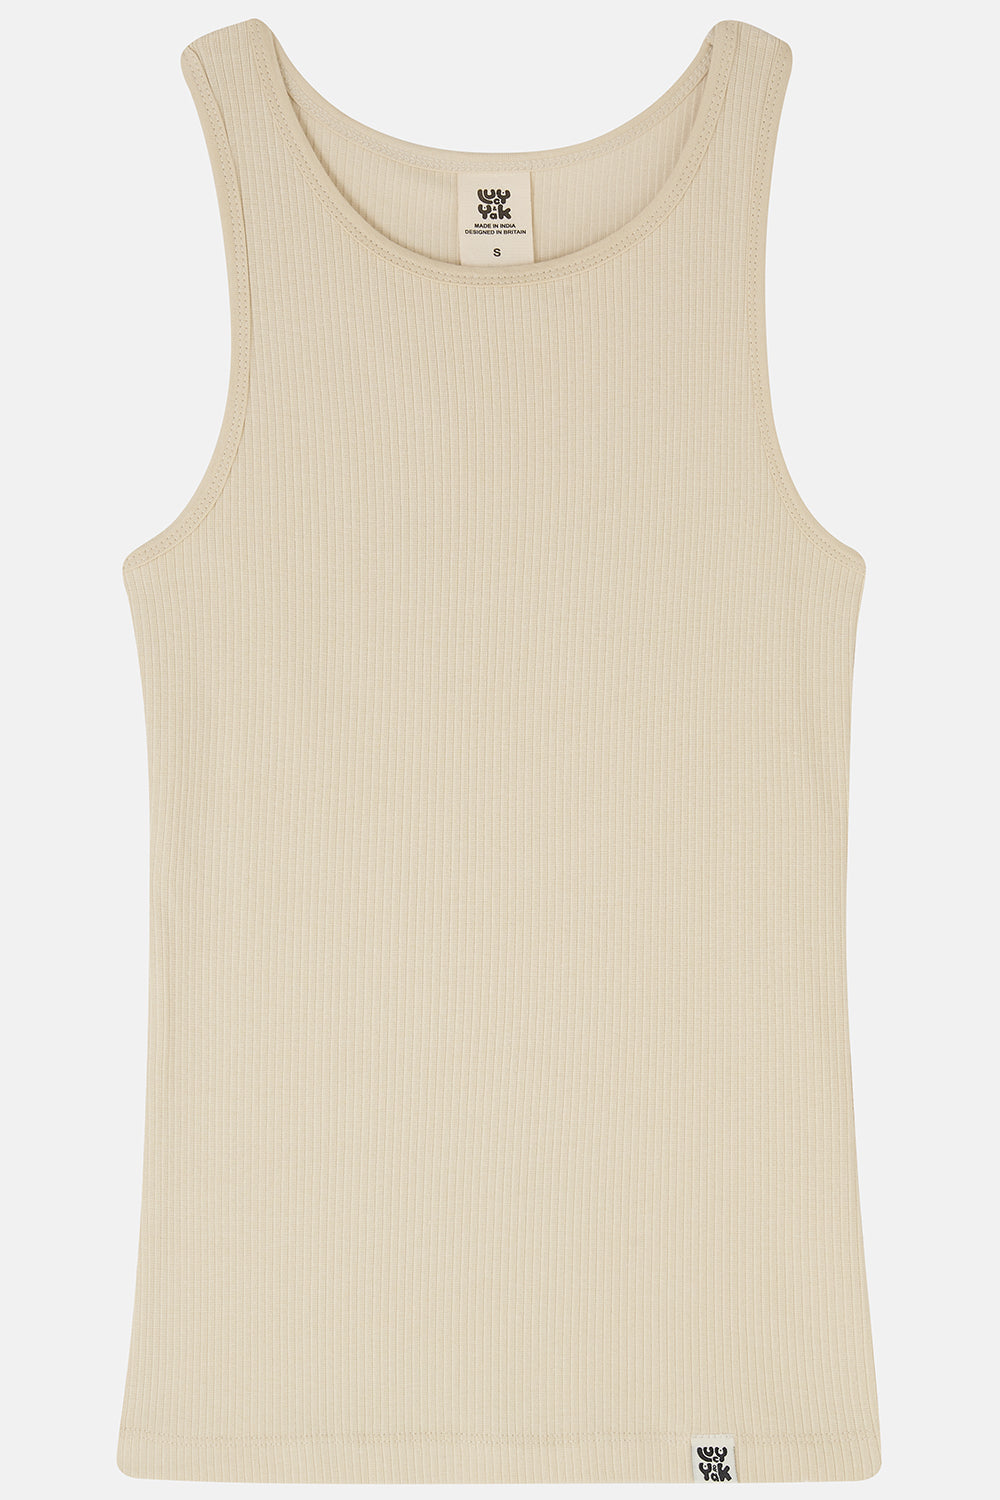 Flo Vest Top: ORGANIC COTTON & LENZING™ ECOVERO™ - Stone